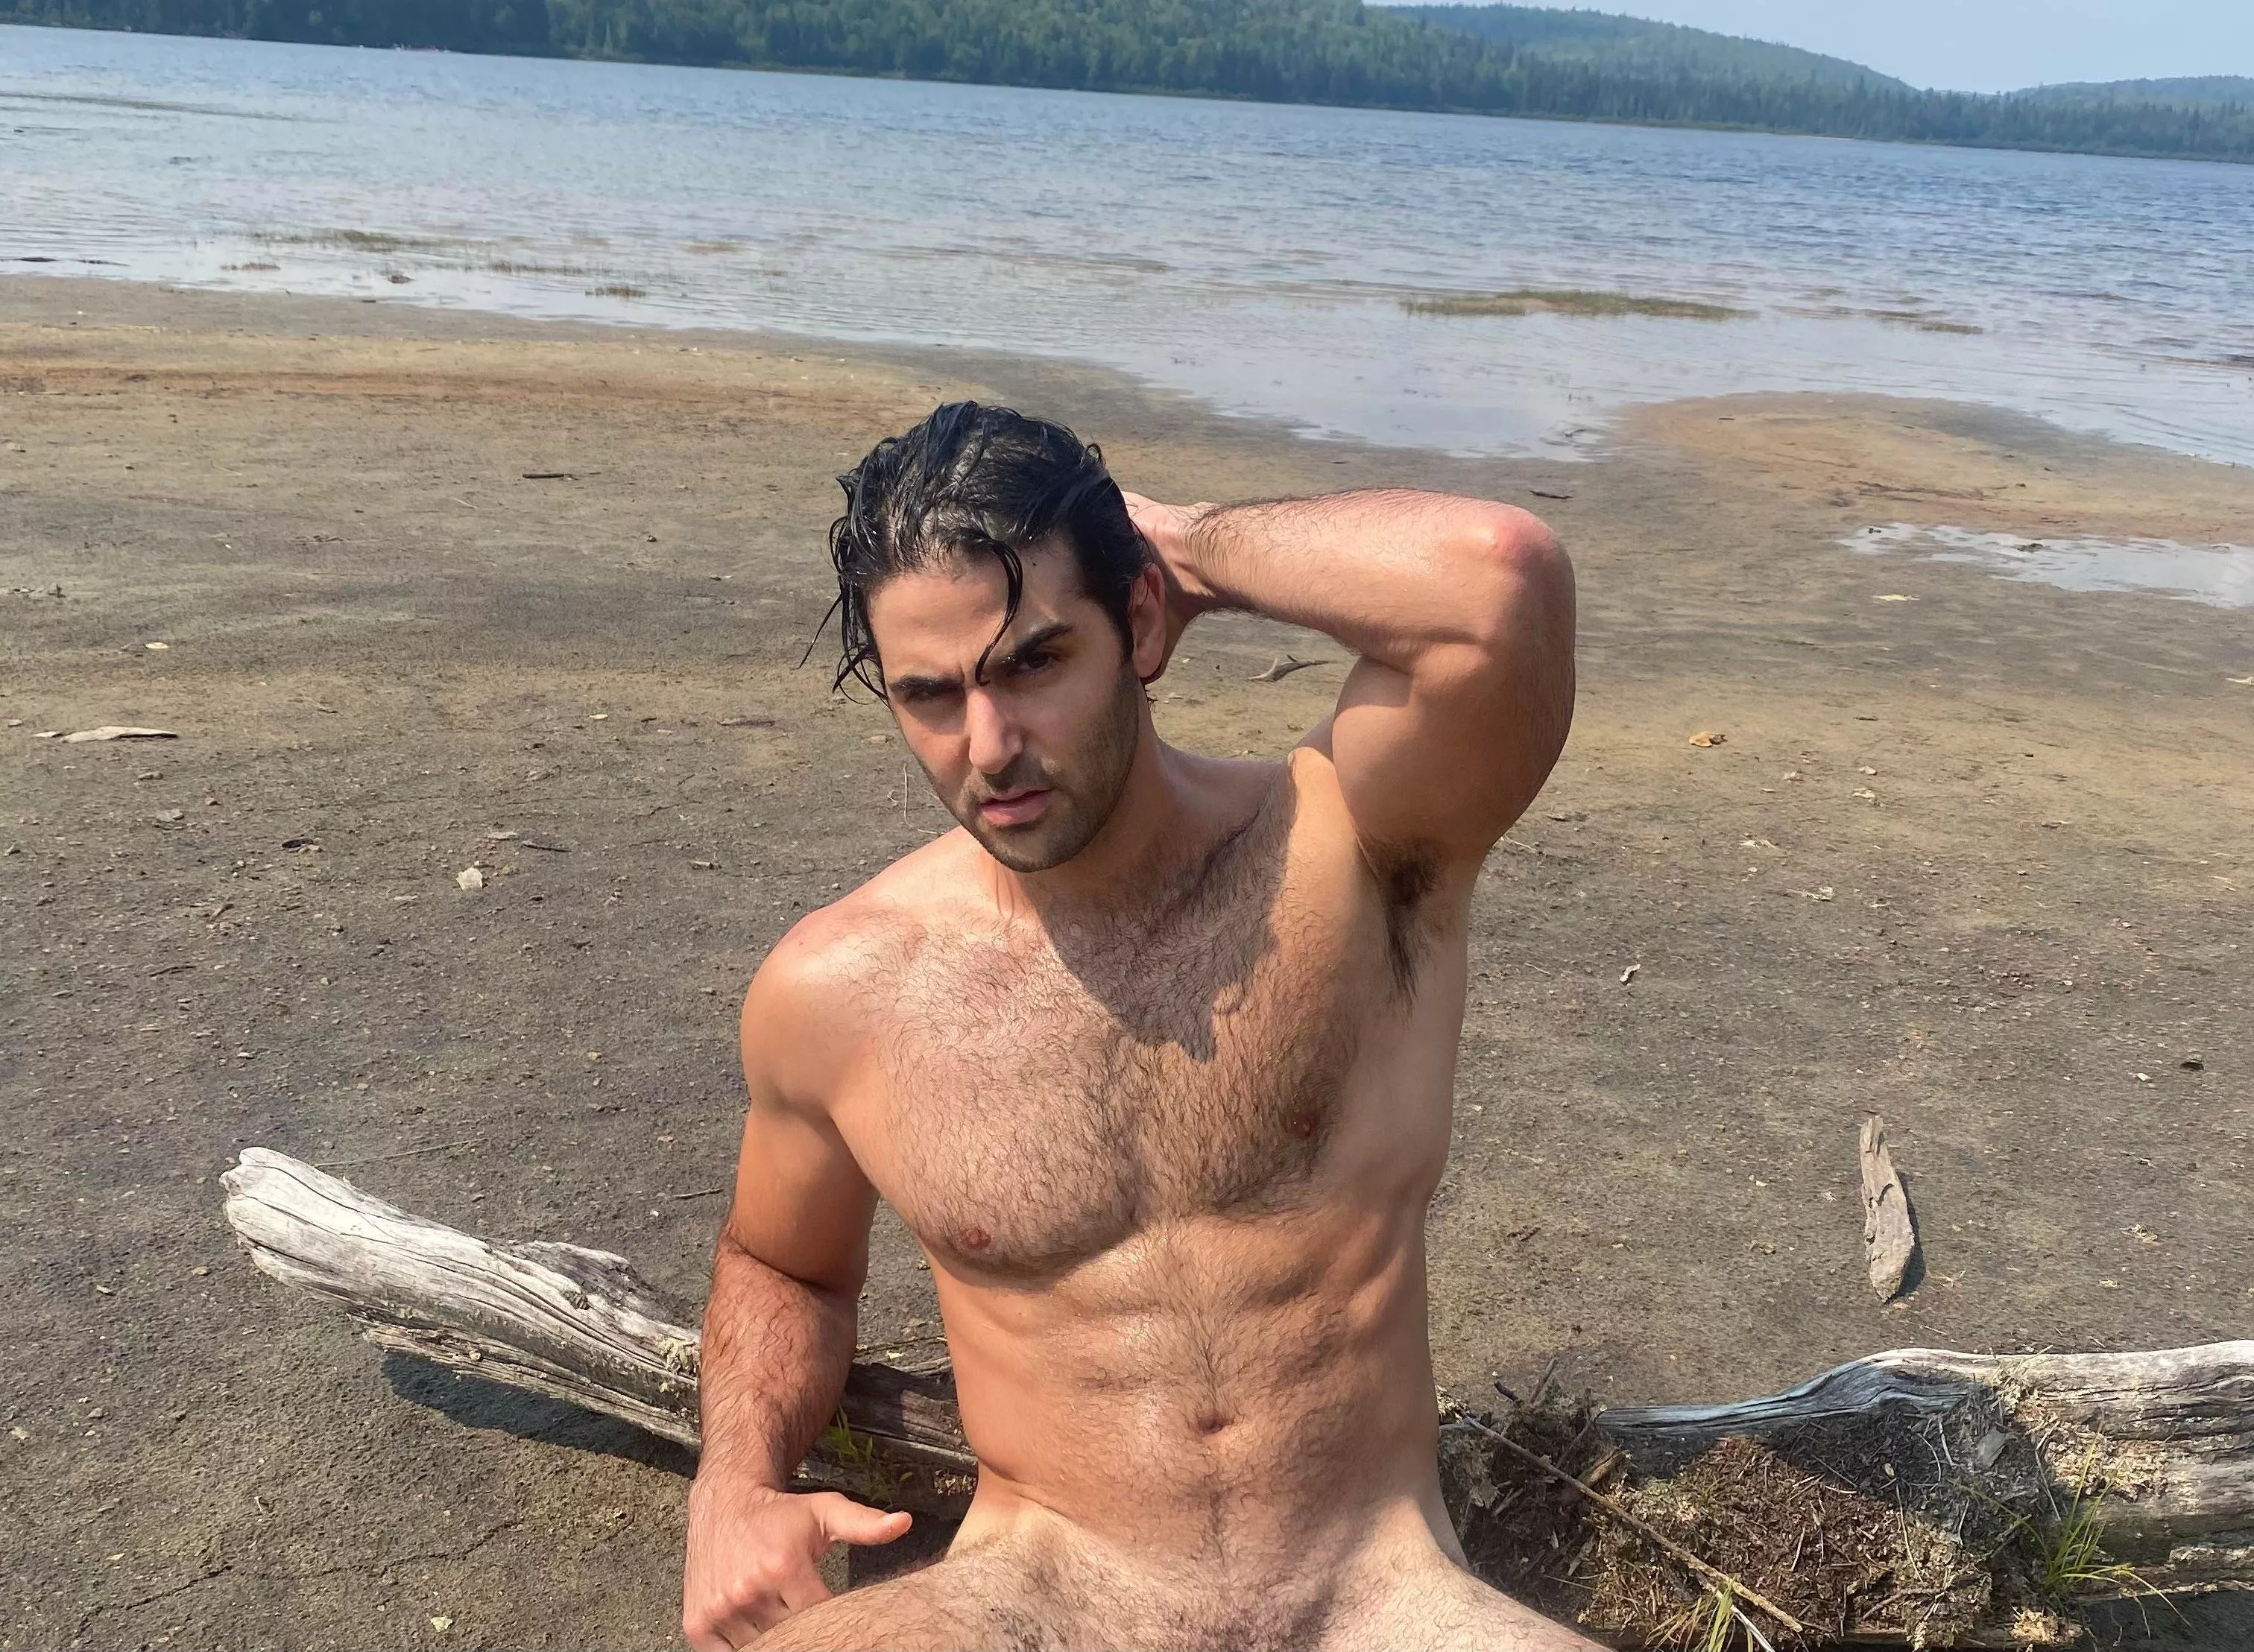 Vegan Men's armpits smell better 😉 nudes | GLAMOURHOUND.COM